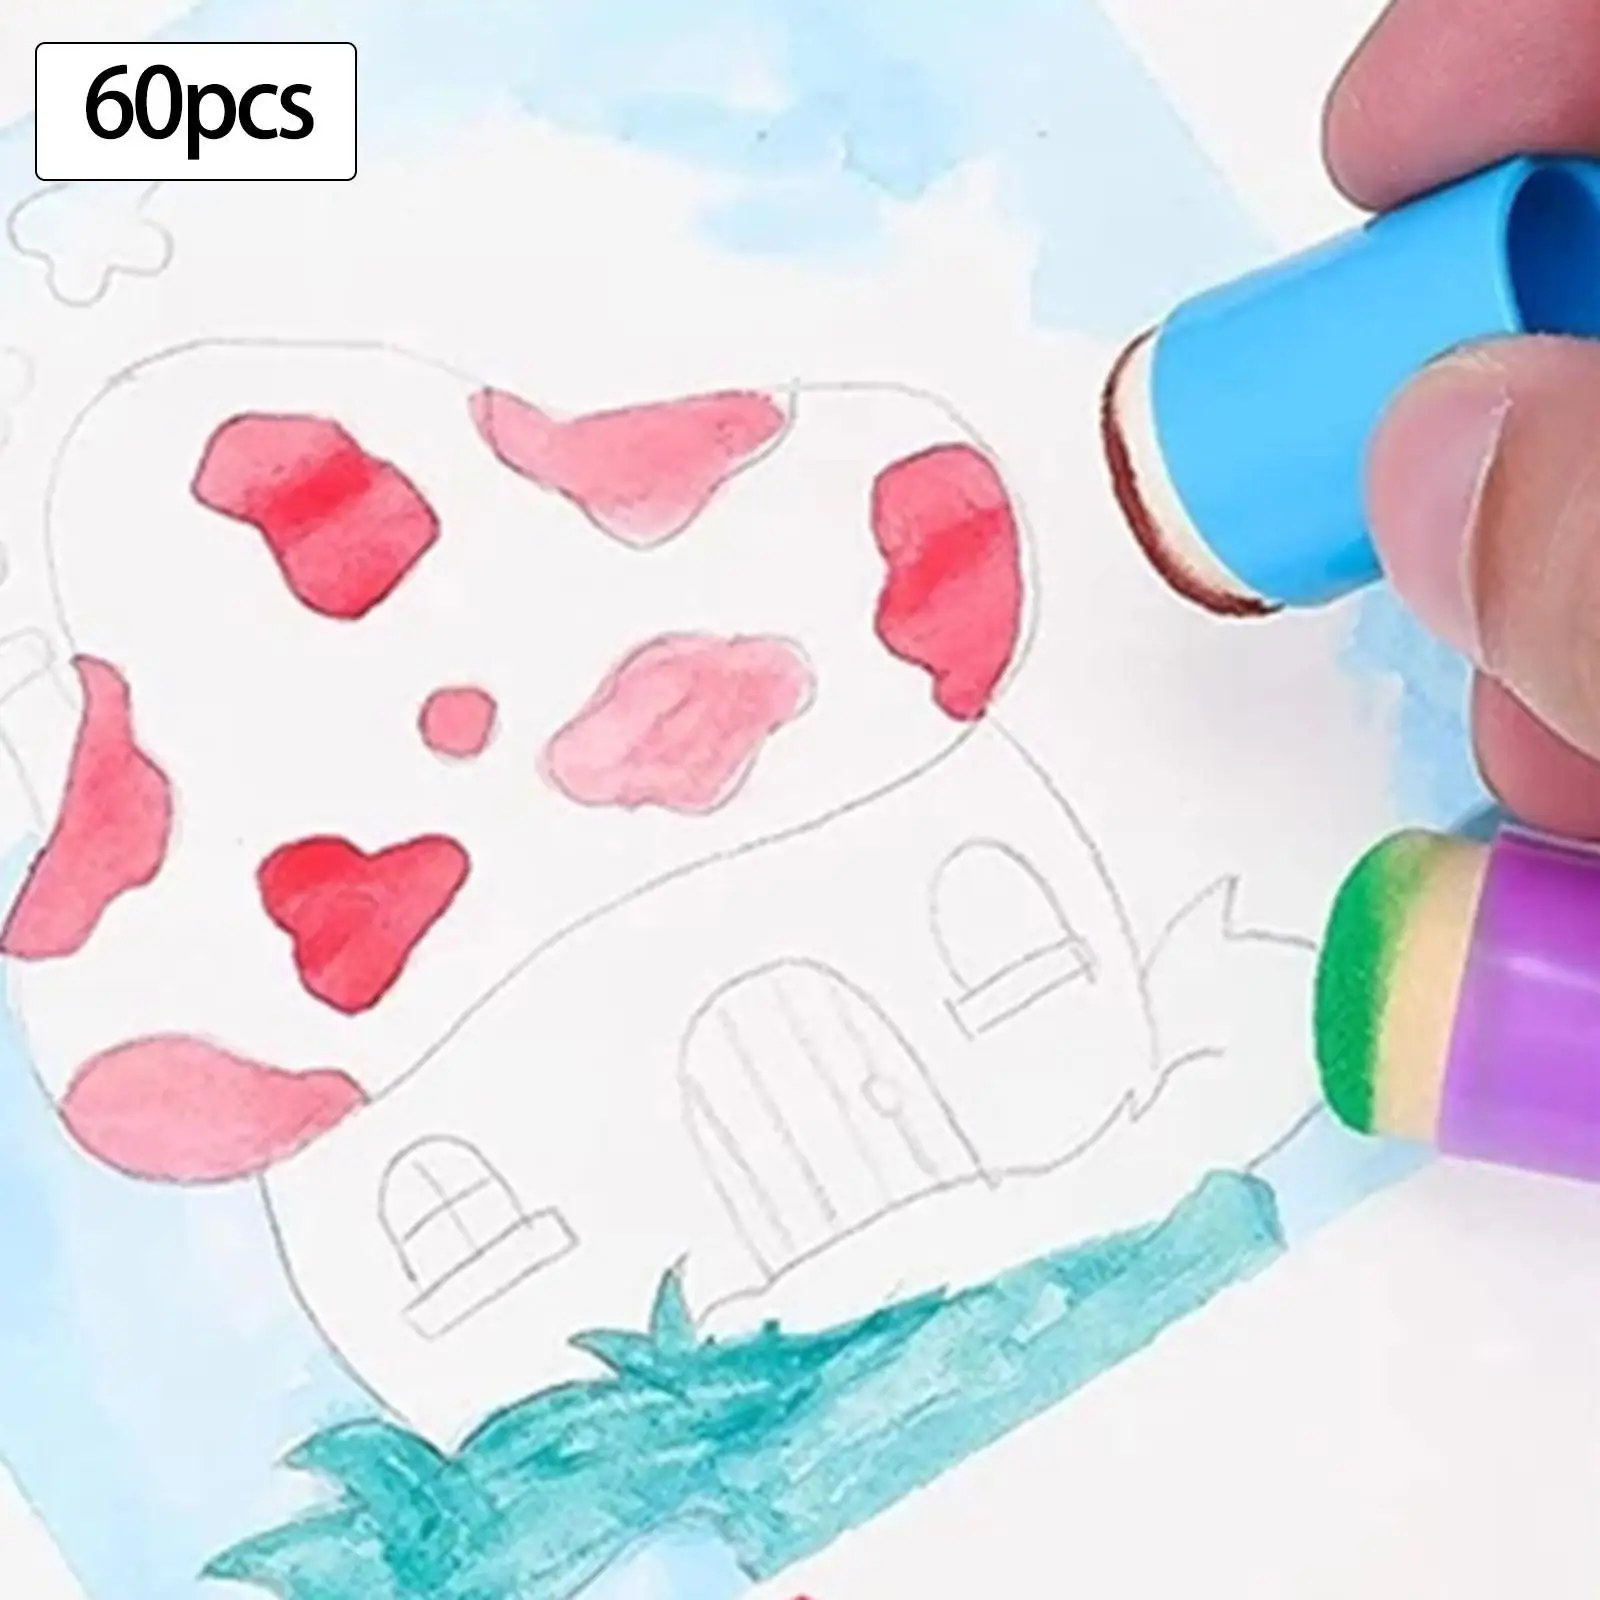 60 Pieces Finger Sponge Daubers for Art Crafts Applying Card Making DIY Scrapbook